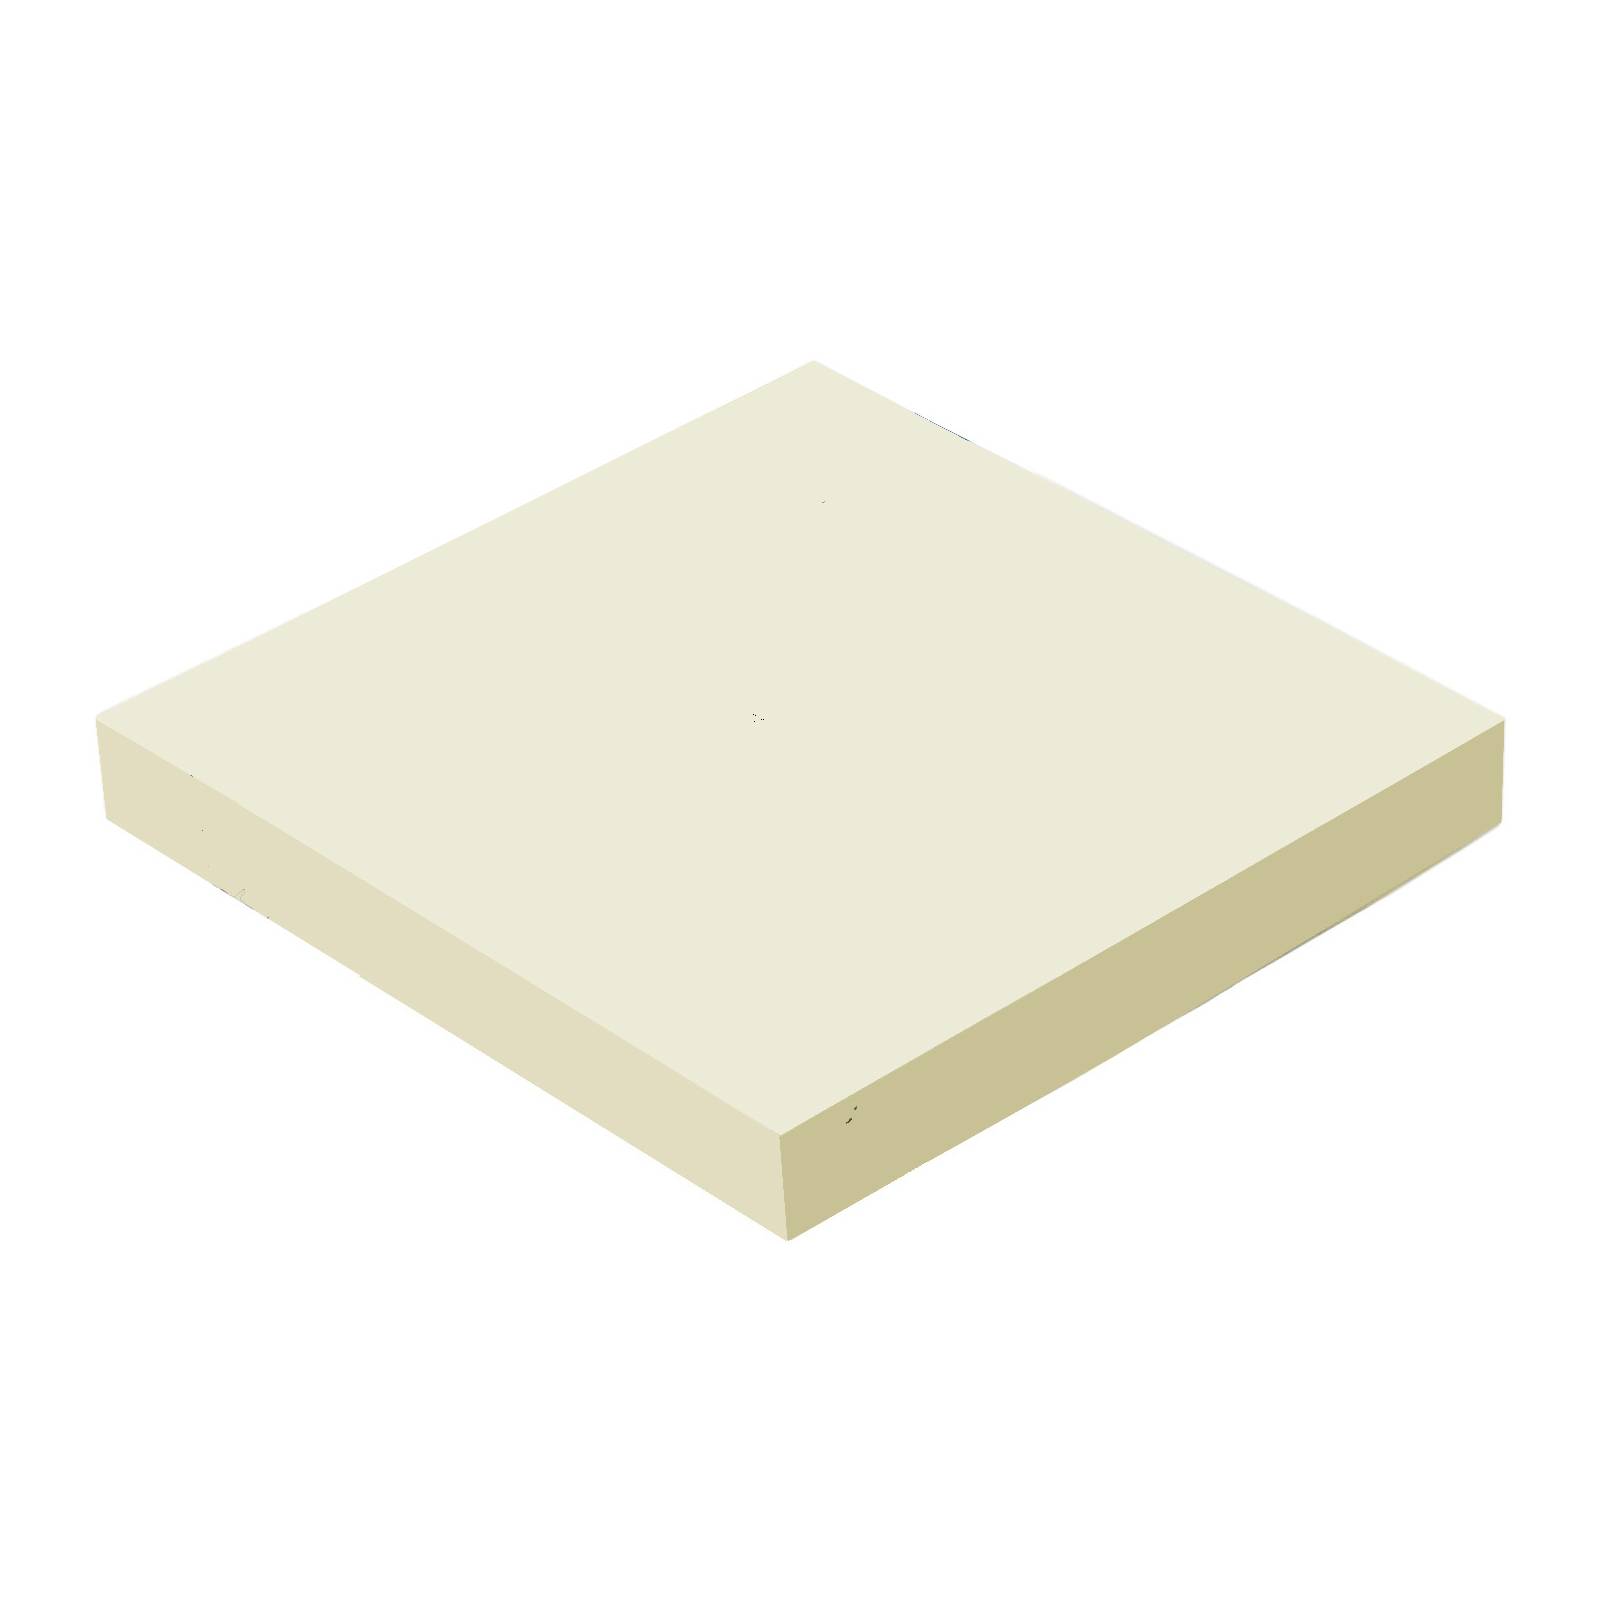 Бумага для заметок Buromax with adhesive layer 76х76мм, 100sheets, JOBMAX, yellow (BM.2312-01)